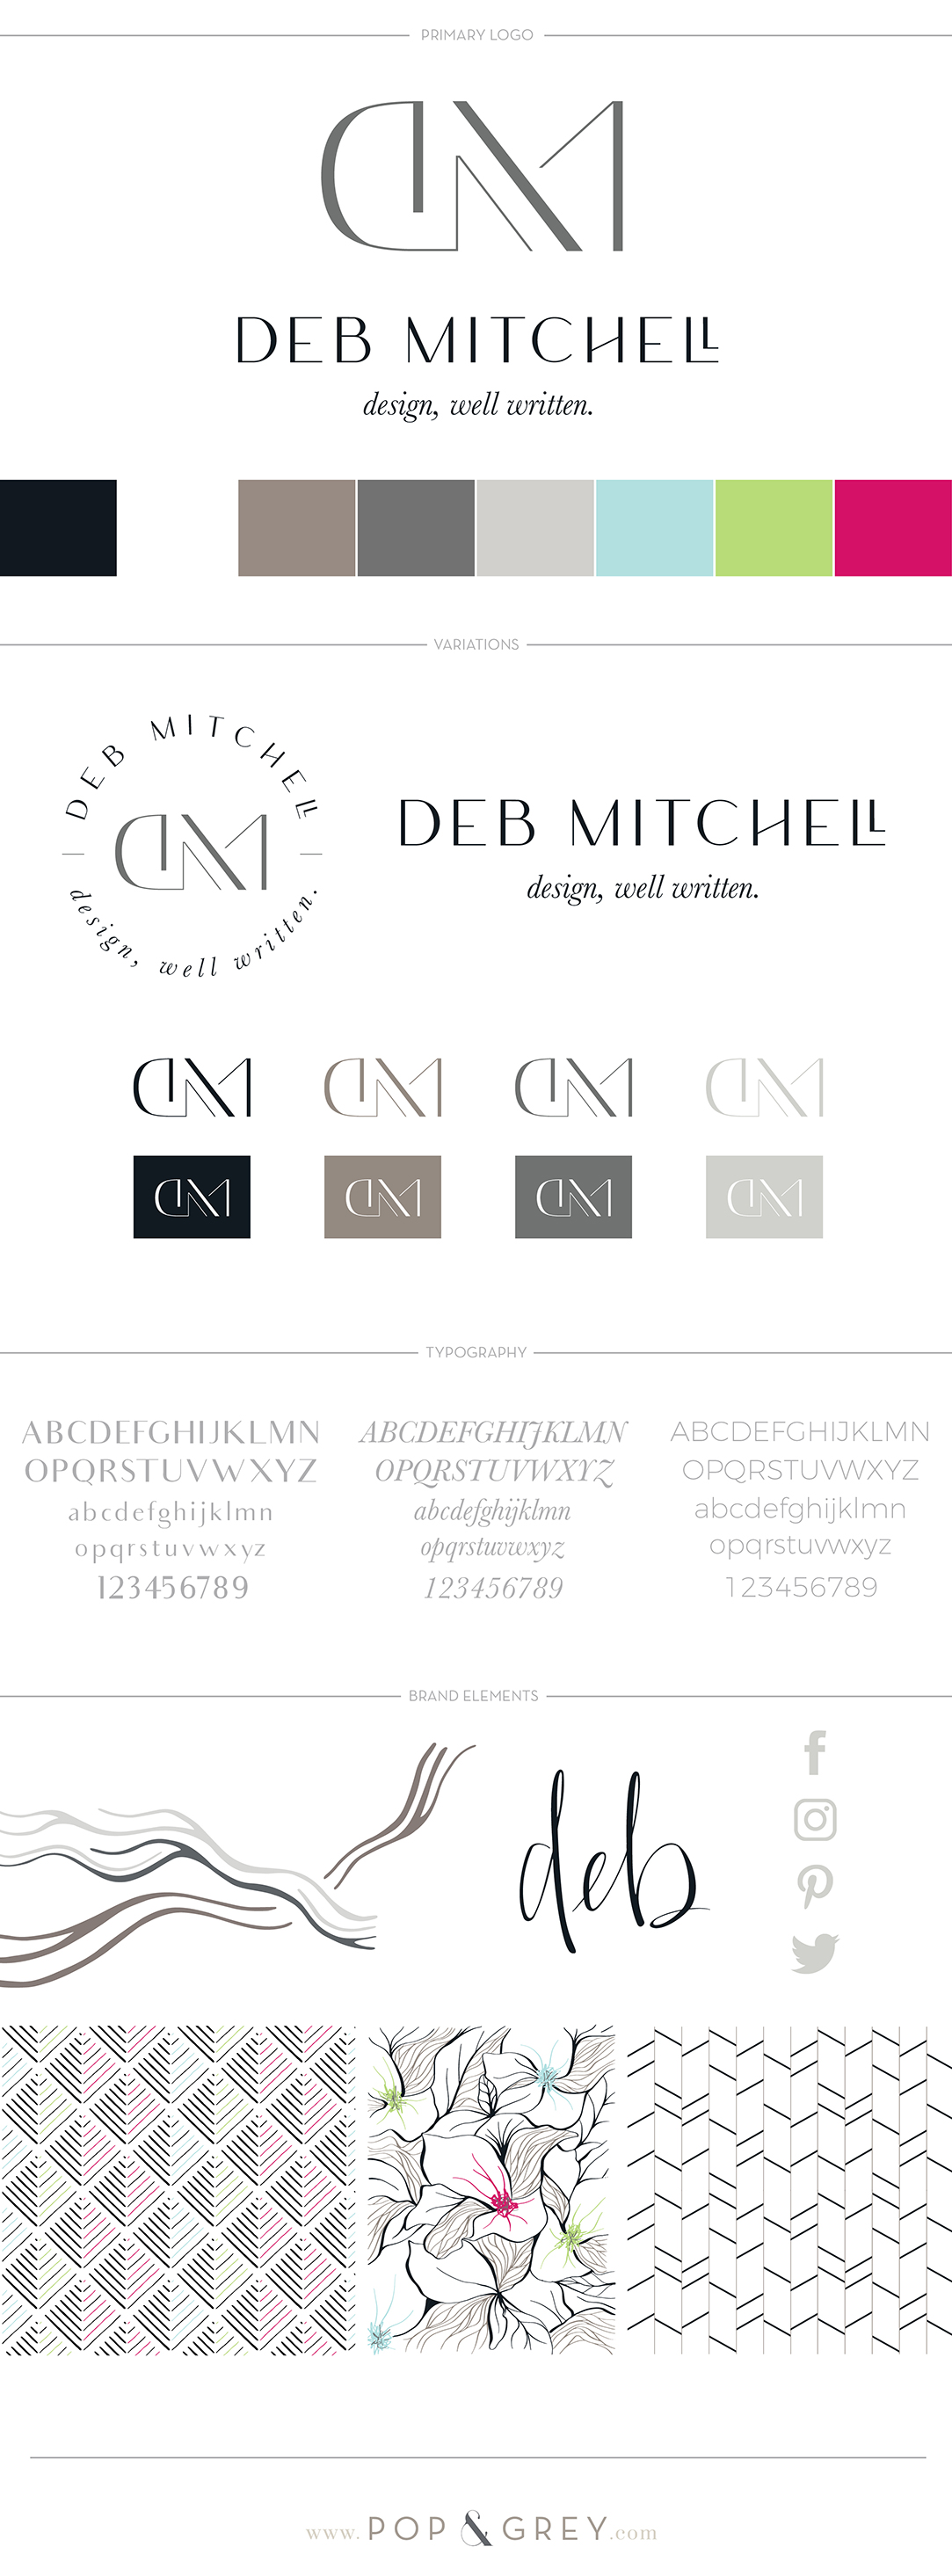 Deb Mitchell Writing brand design by Pop & Grey